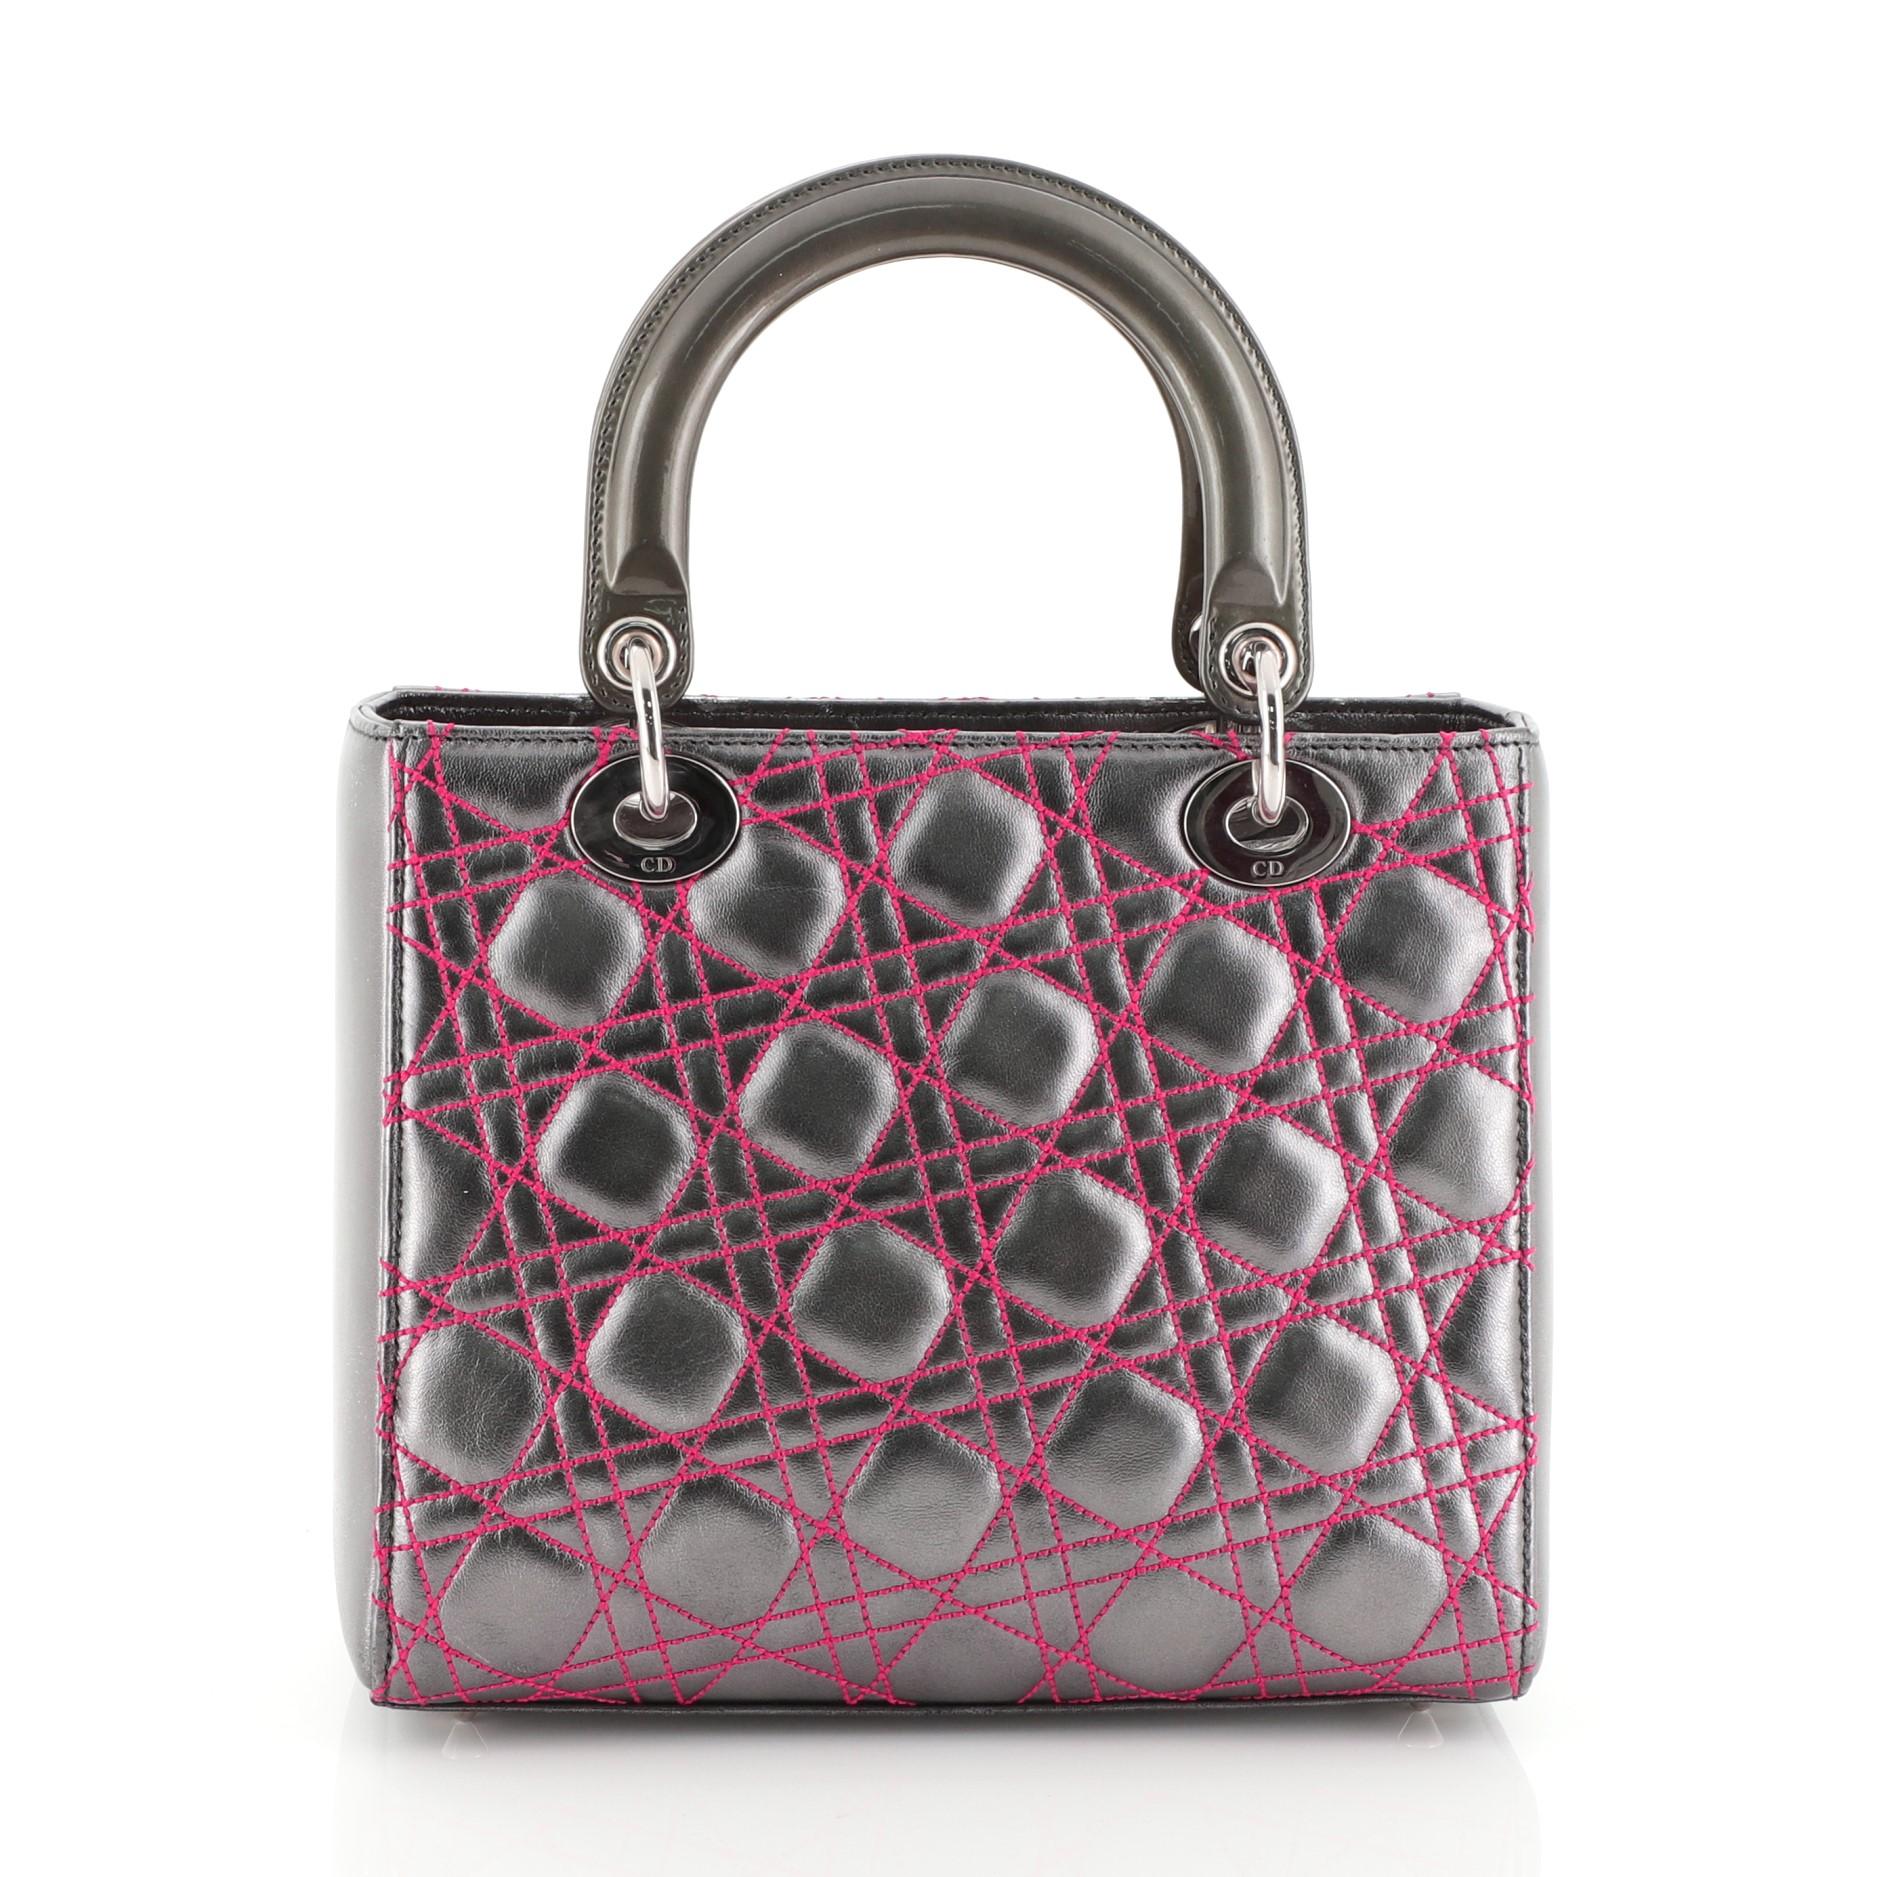 Gray Christian Dior Lady Dior Handbag Anselm Reyle Cannage Quilt Leather Medium 